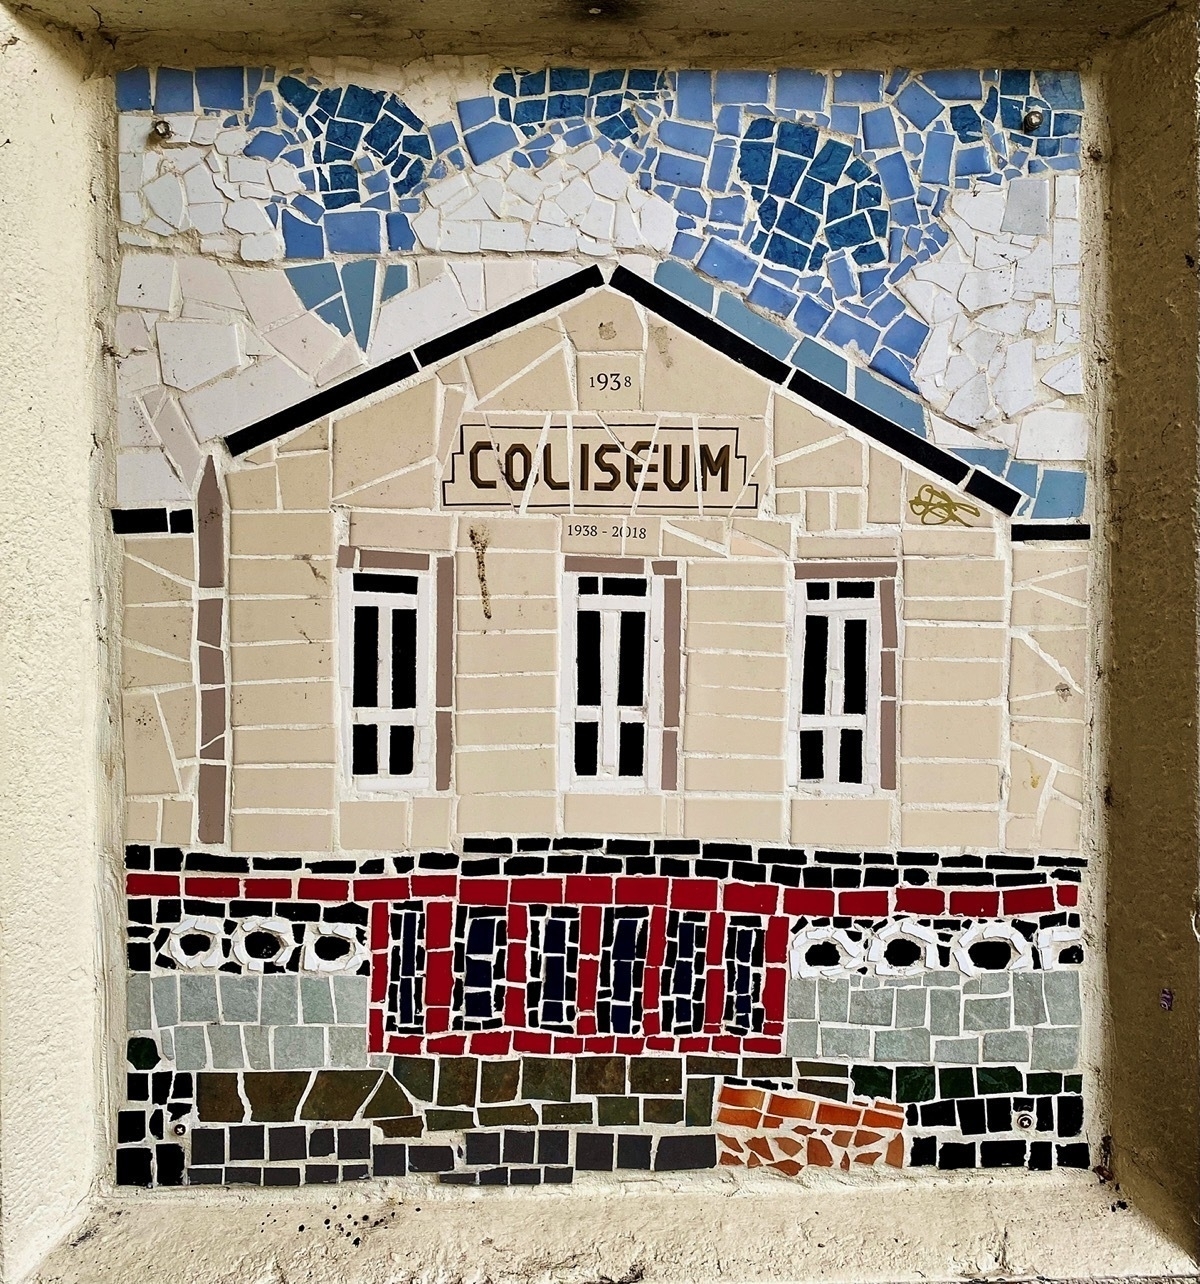 Tiled mosaic of 1930s Aberdare Coliseum theatre building